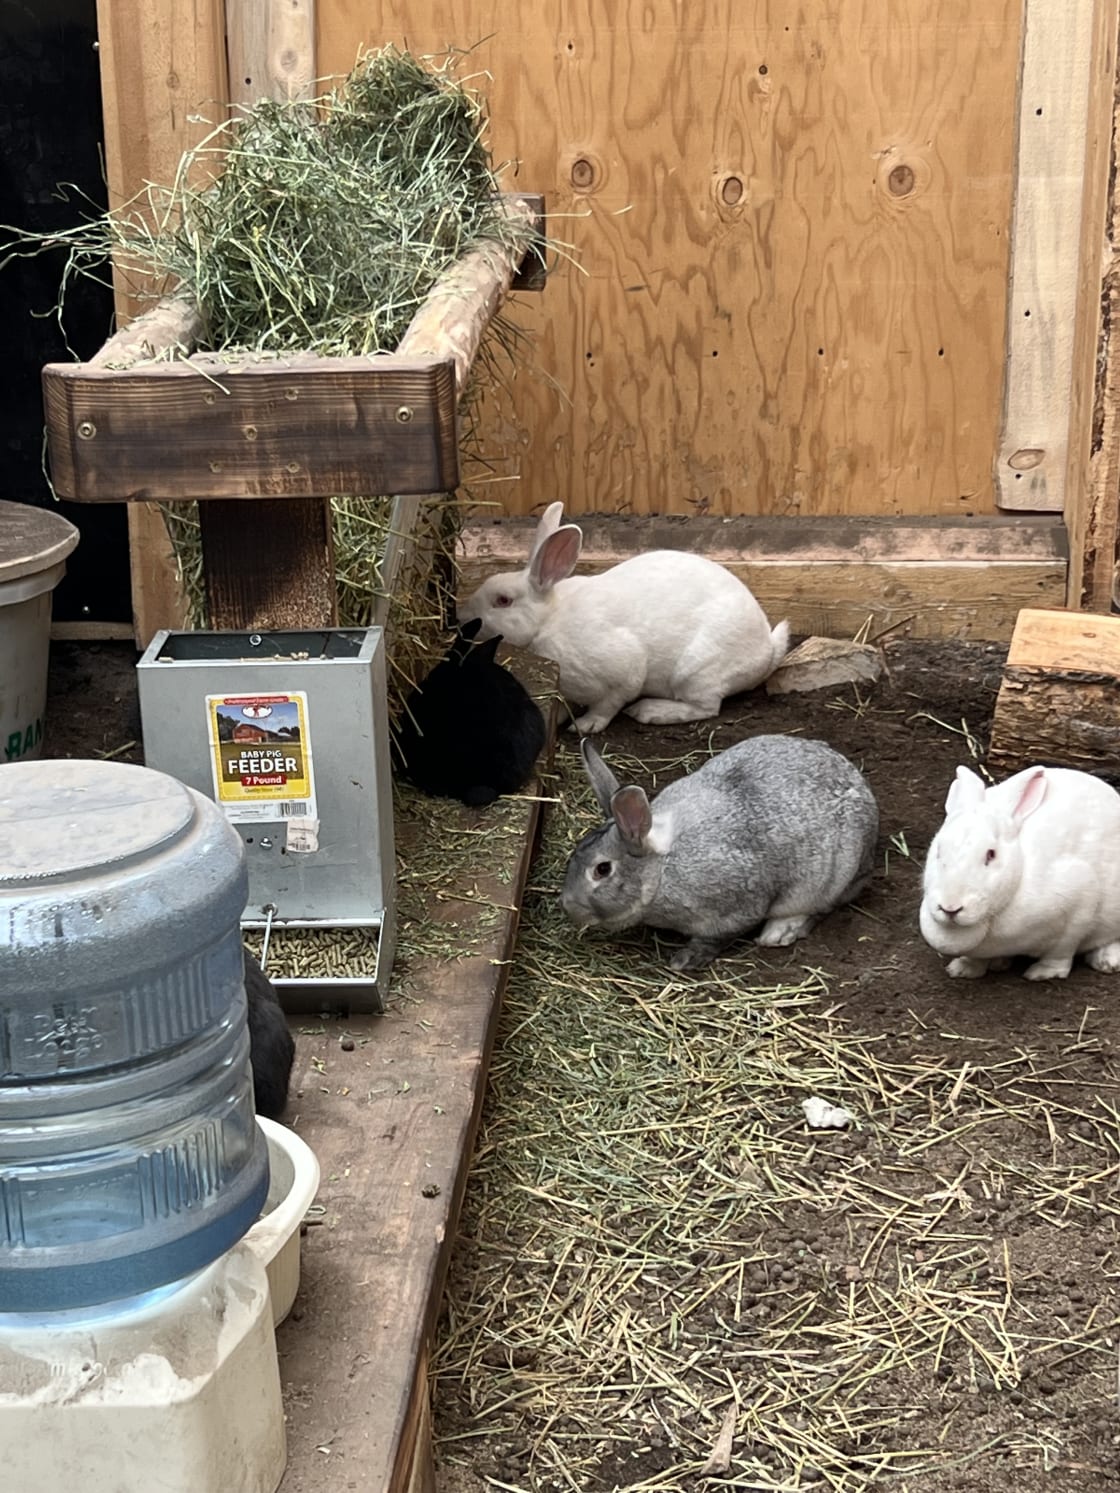 The homestead rabbit colony